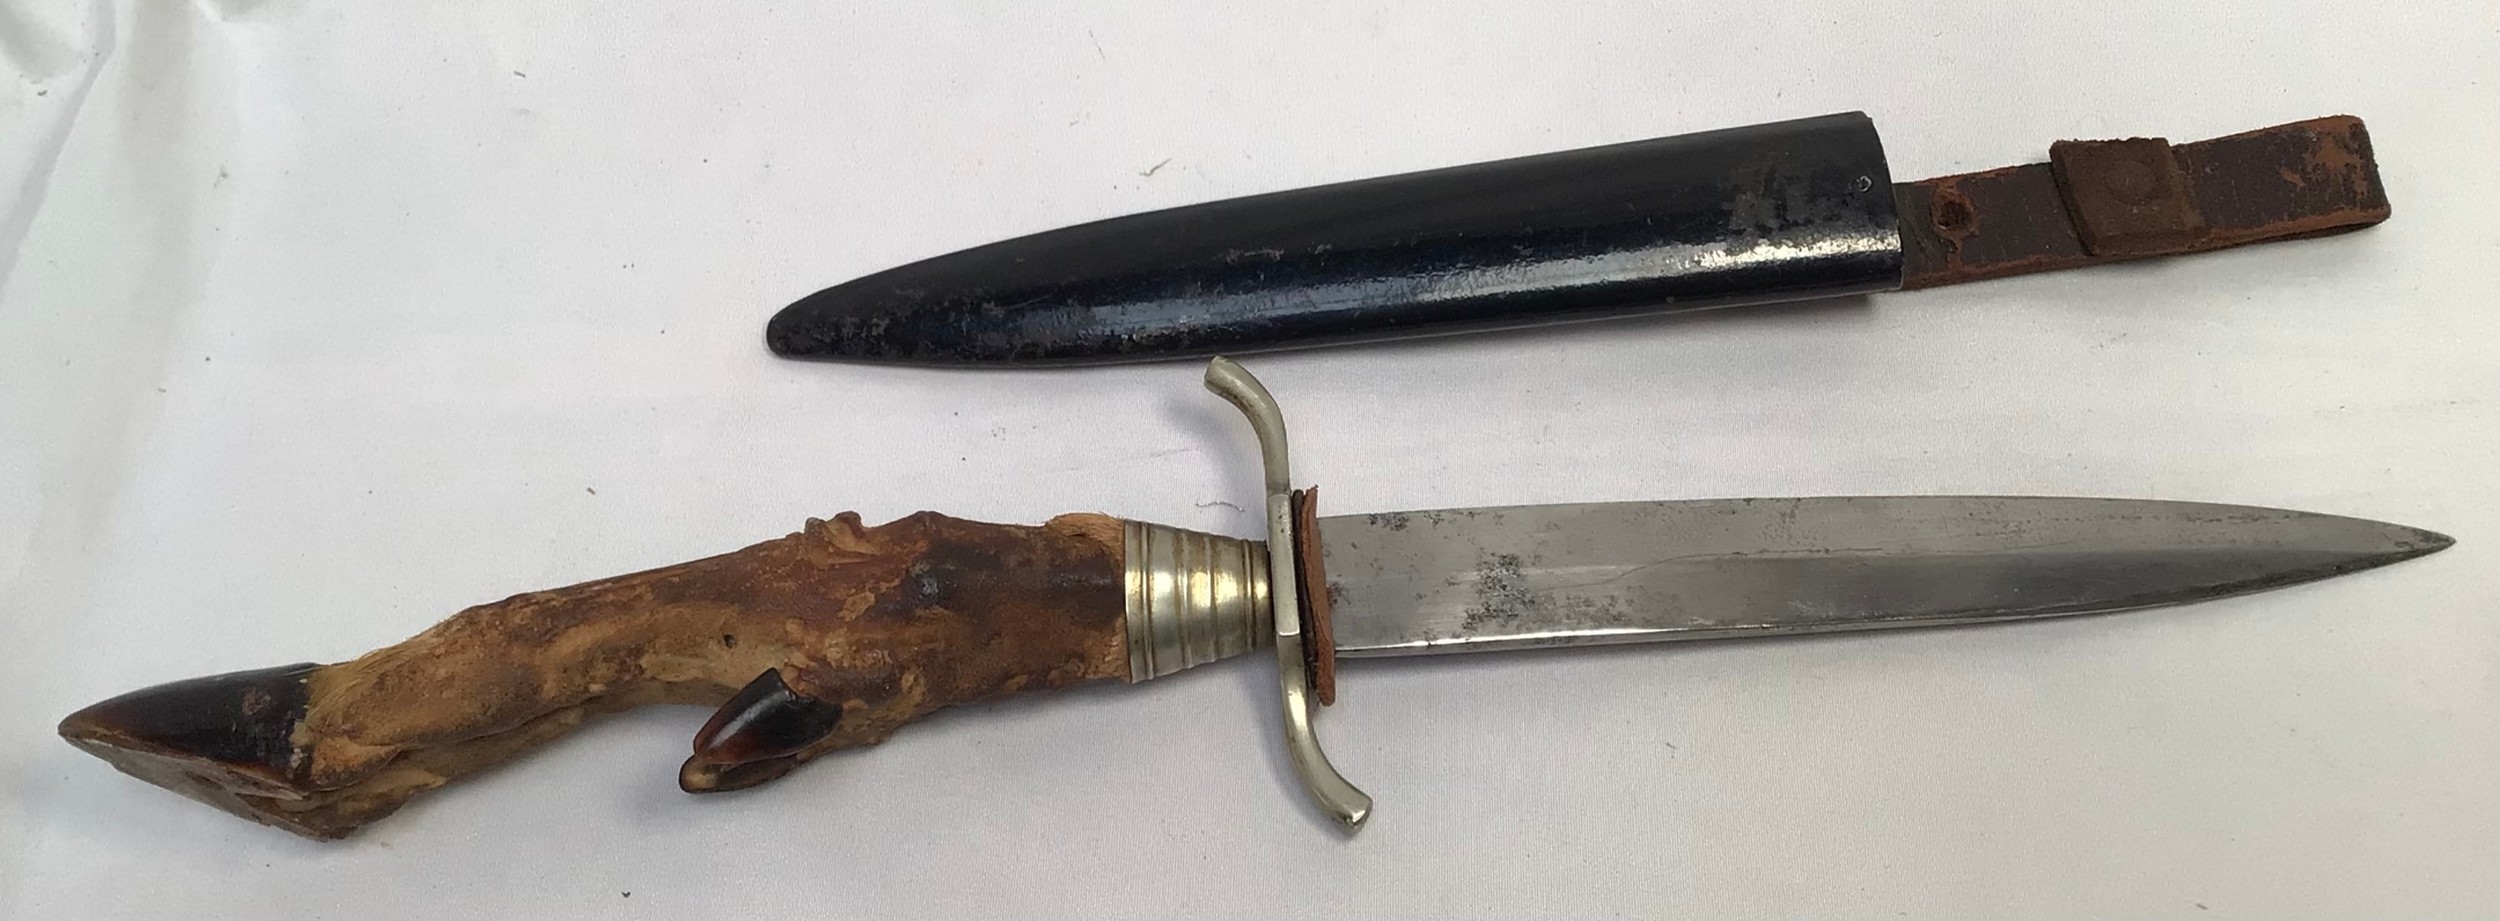 A WWI Deer's Foot Officer's fighting dagger, blade engraved and burnished with L.K. Jäger- - Image 2 of 2